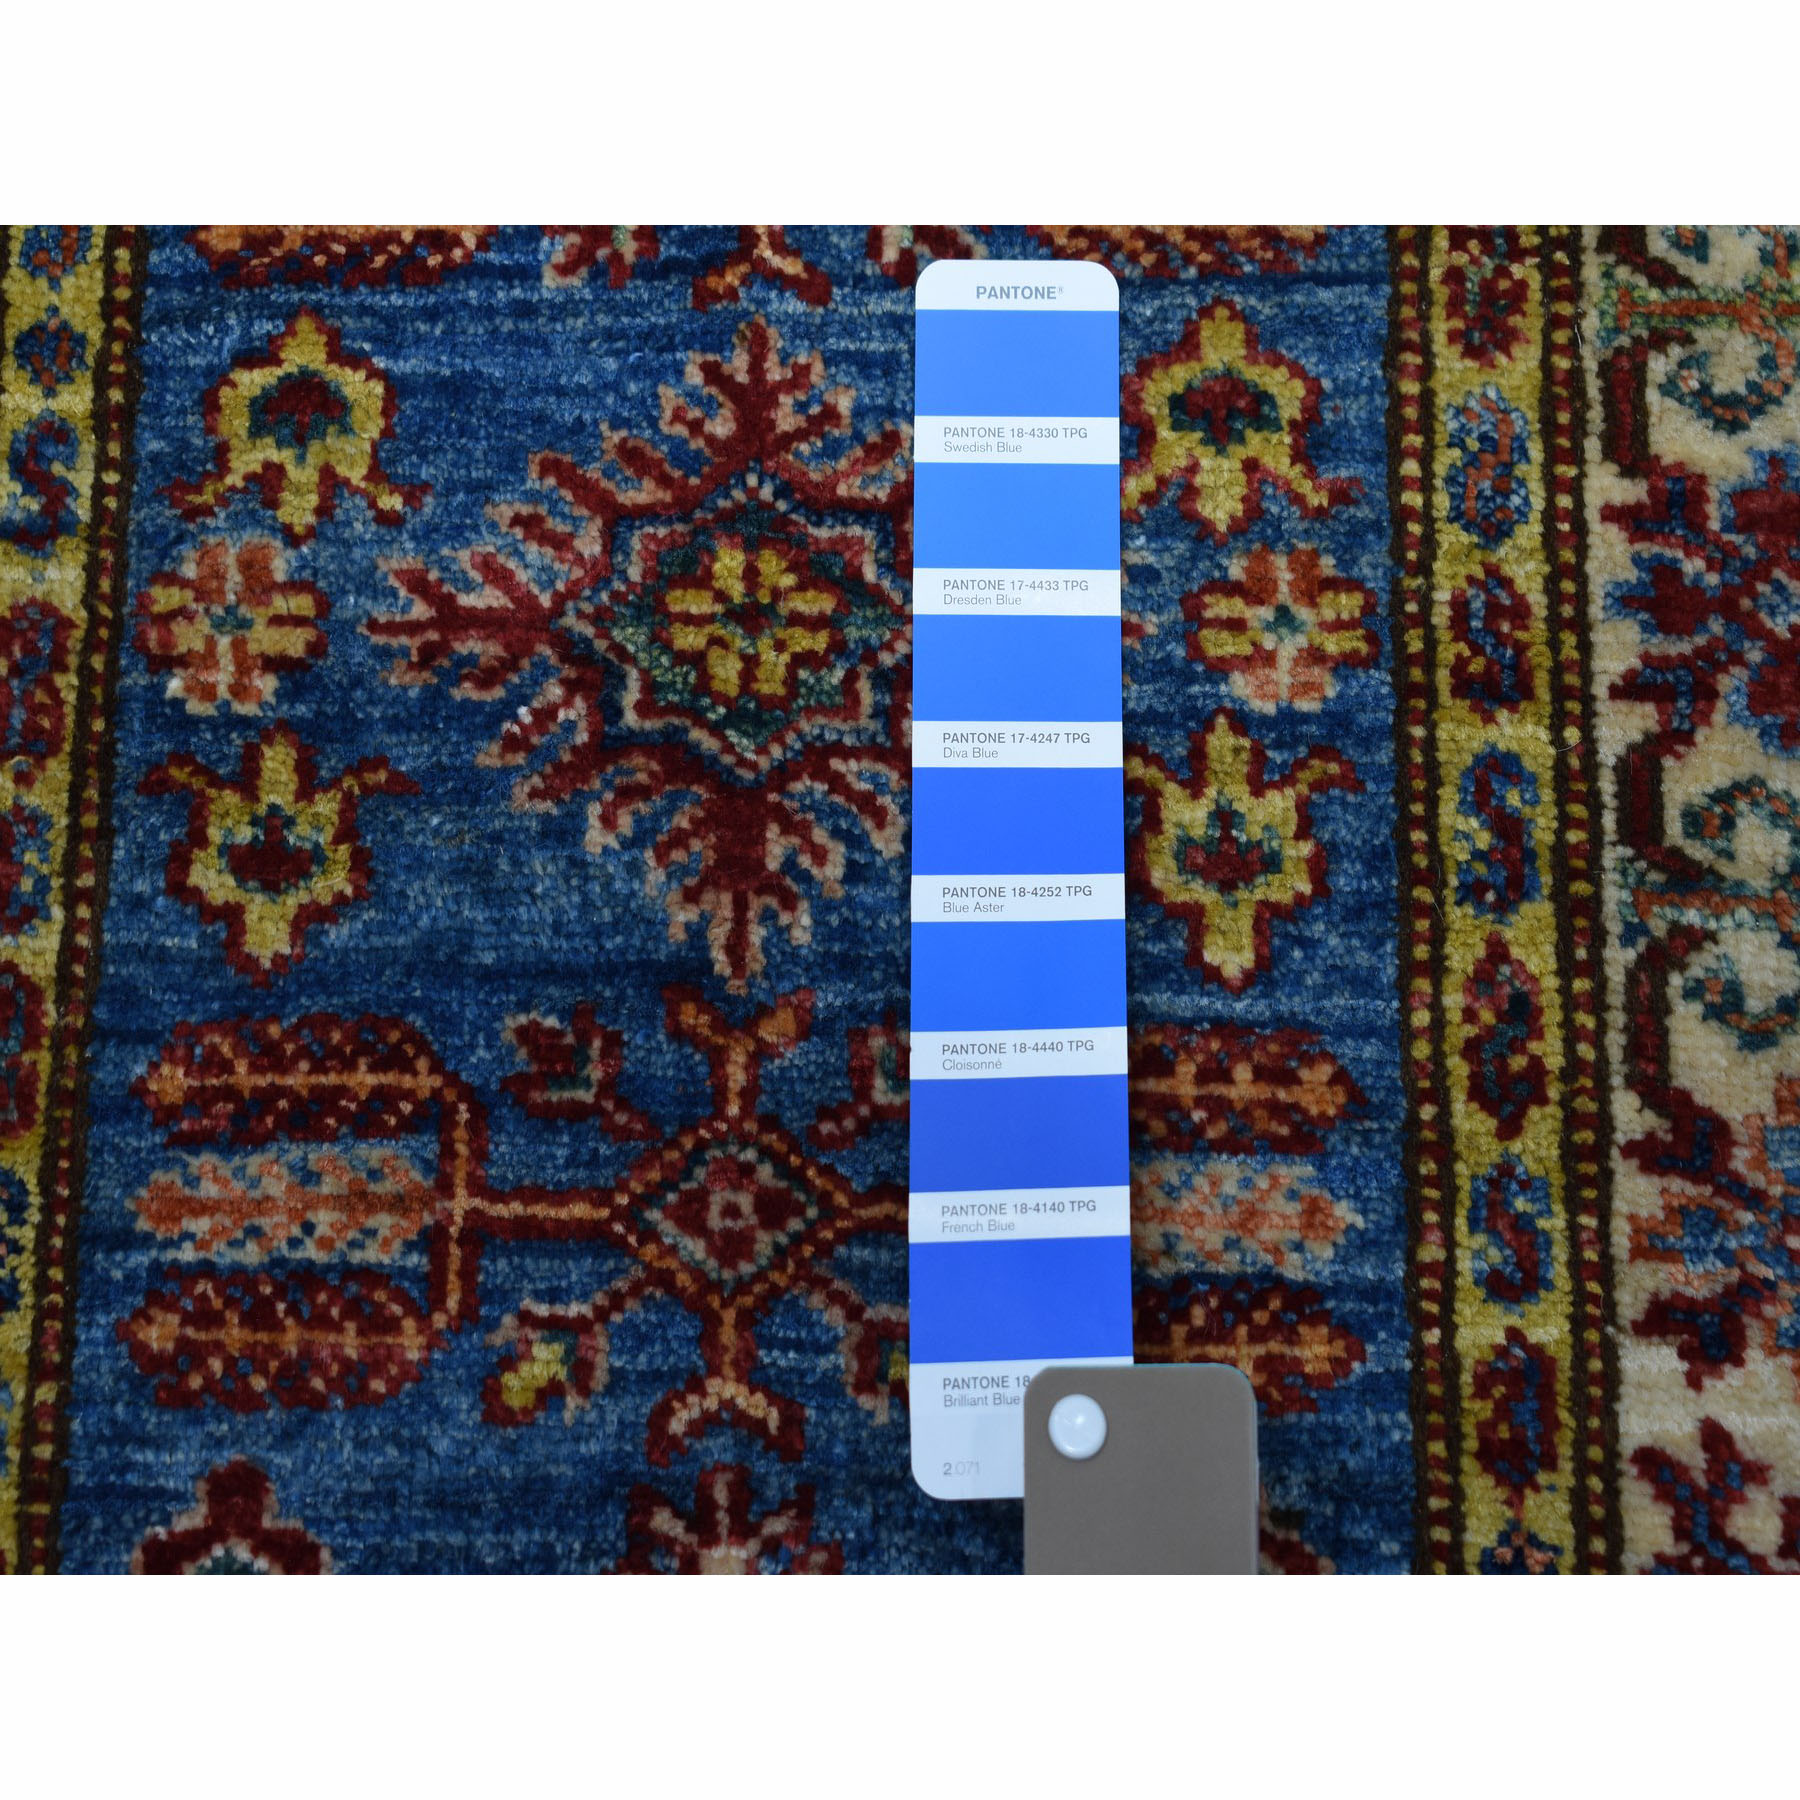 2-x2-10  Super Kazak Pure Wool Blue Geometric Design Hand-Knotted Oriental Rug 